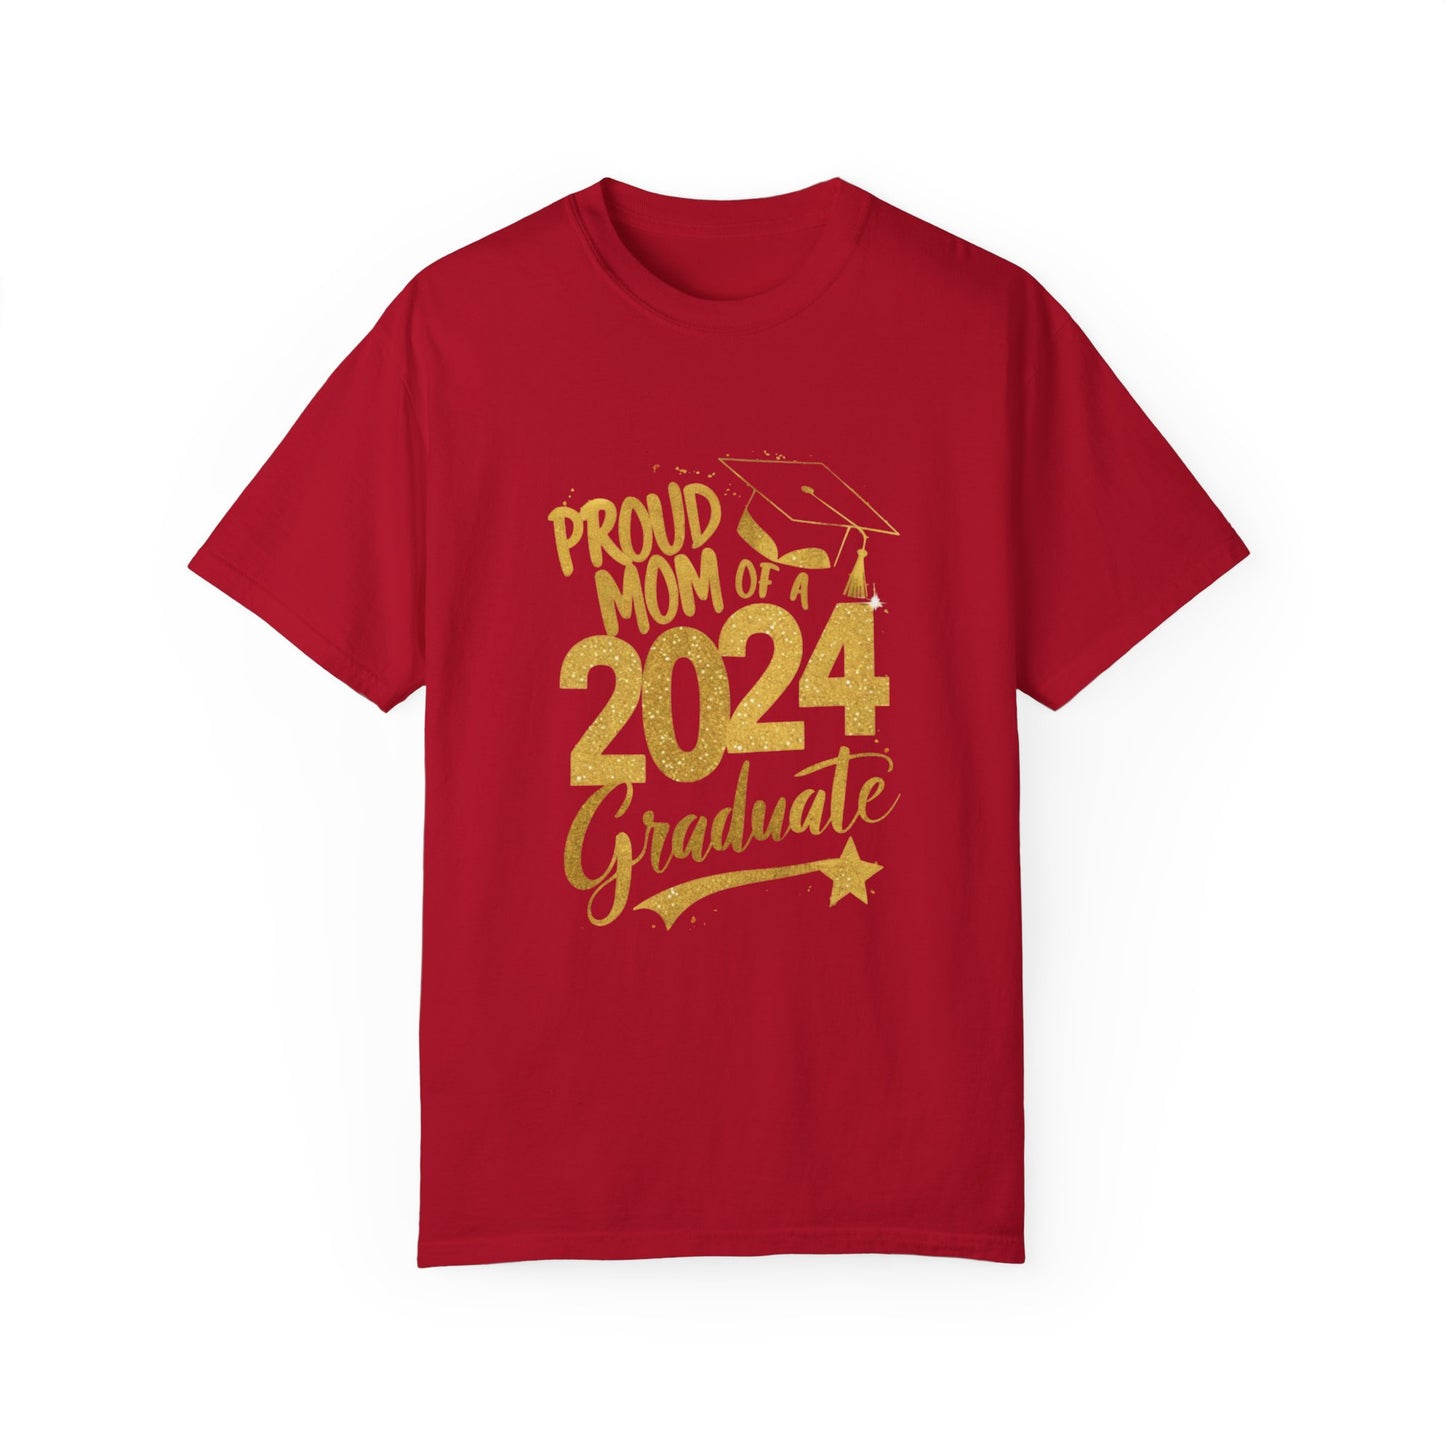 Proud of Mom 2024 Graduate Unisex Garment-dyed T-shirt Cotton Funny Humorous Graphic Soft Premium Unisex Men Women Red T-shirt Birthday Gift-2